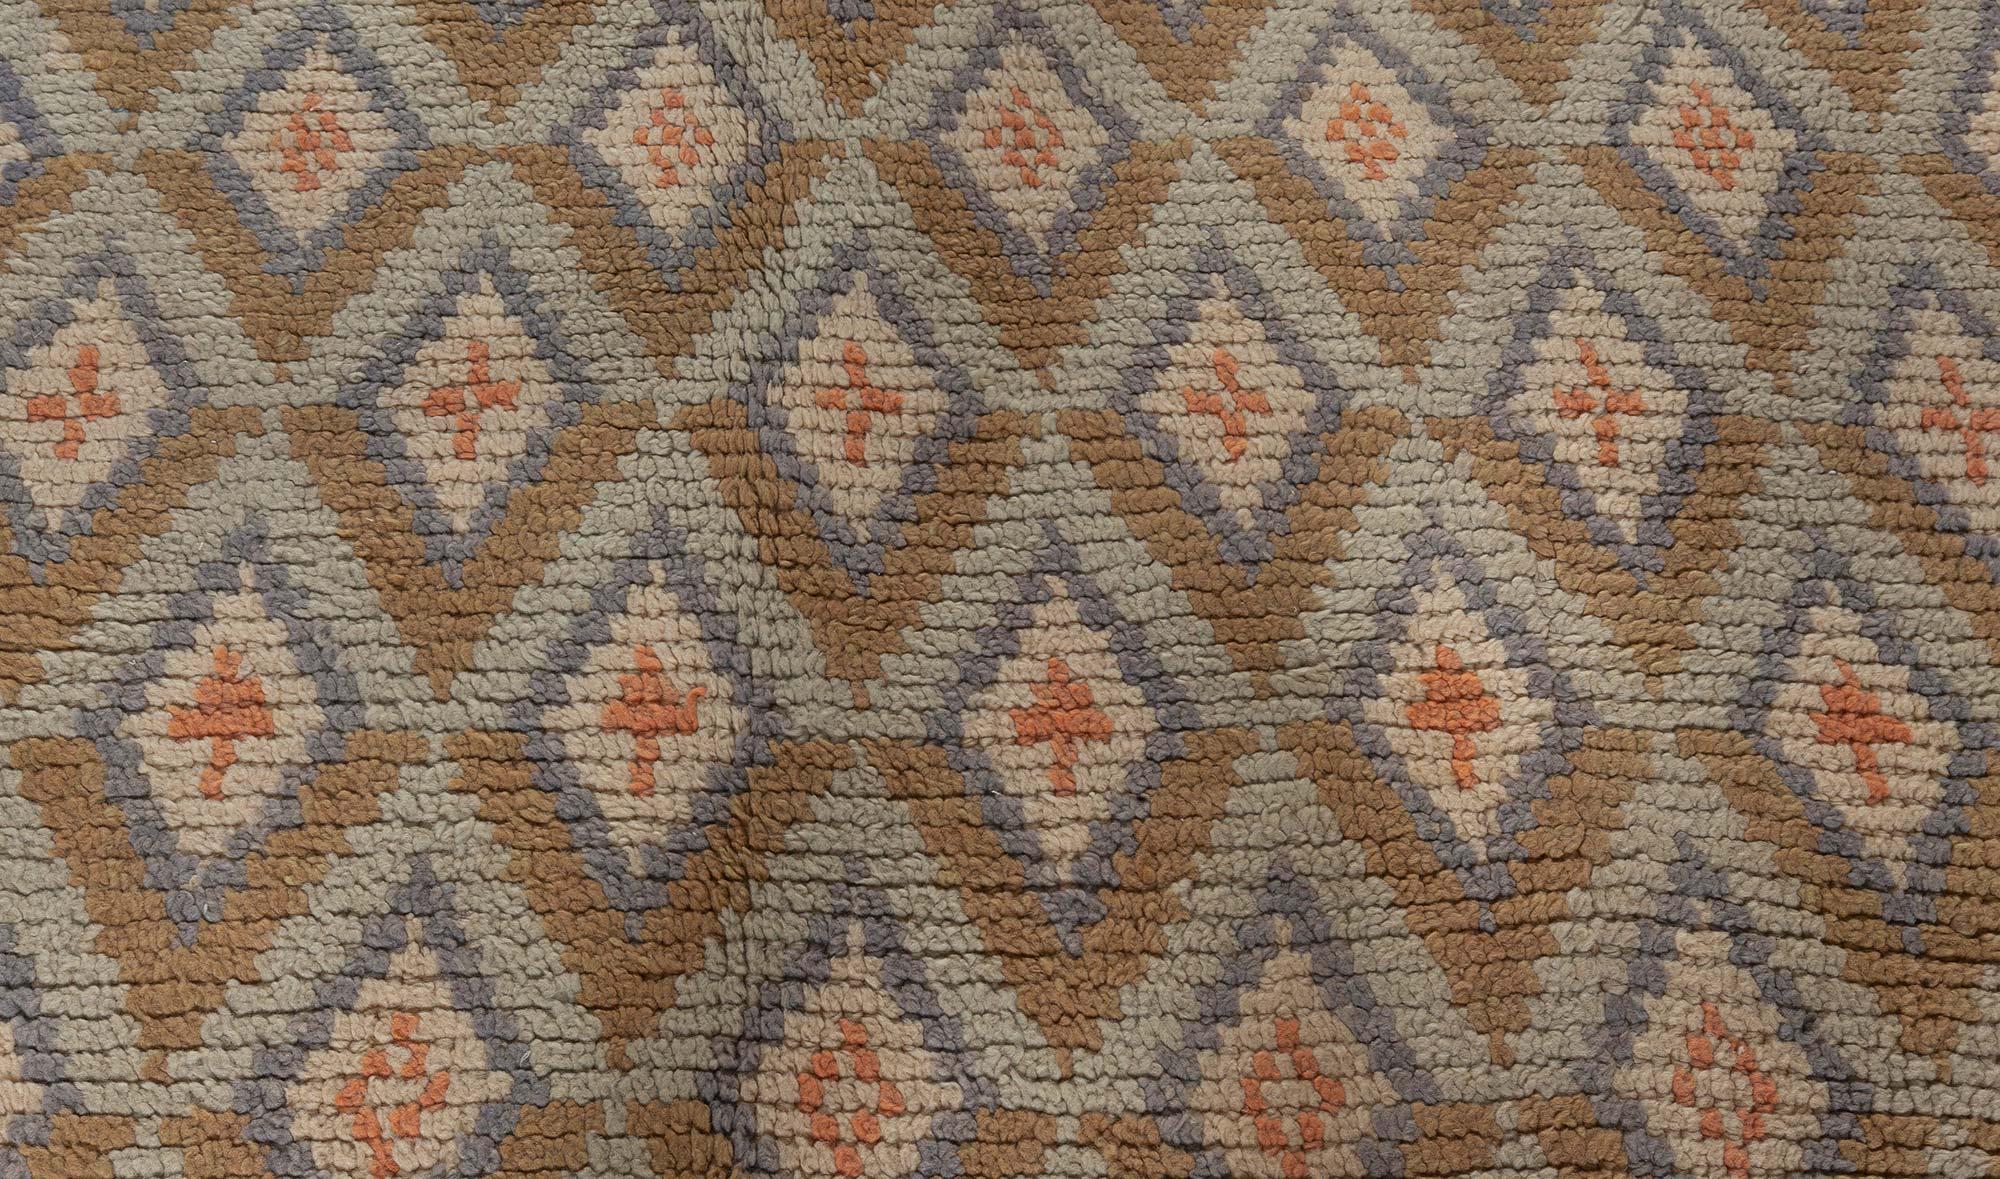 Vintage Swedish Pile rug
Size: 6'3